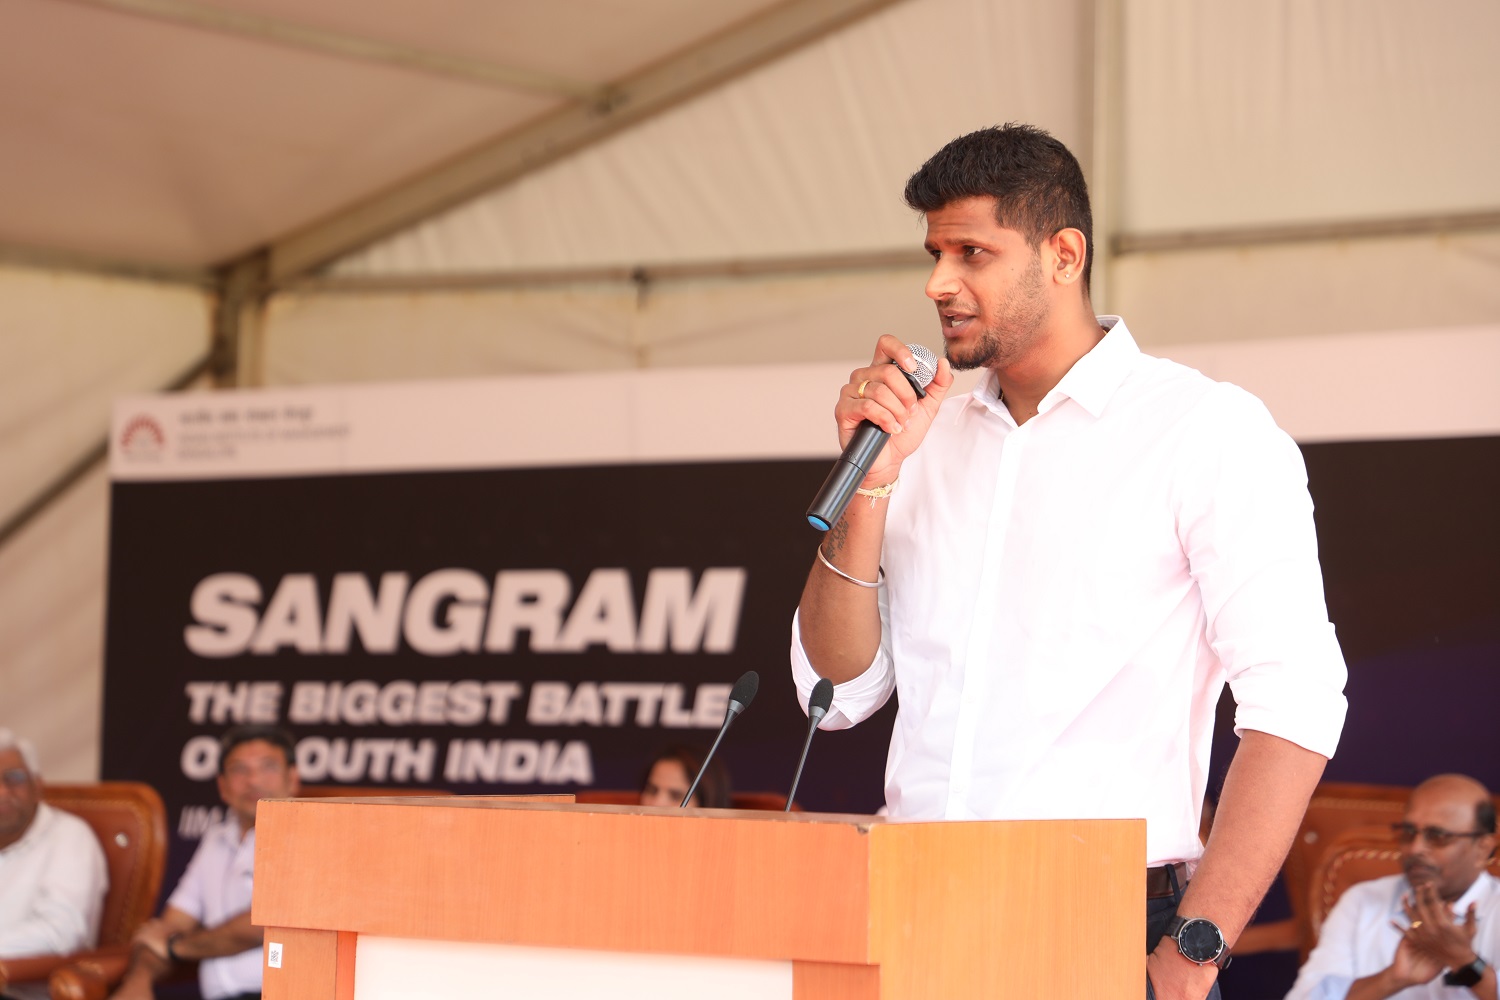 Mr Arvind Arumugam, Gold Medallist – Team India, Basketball, addresses participants at Sangram 2022.